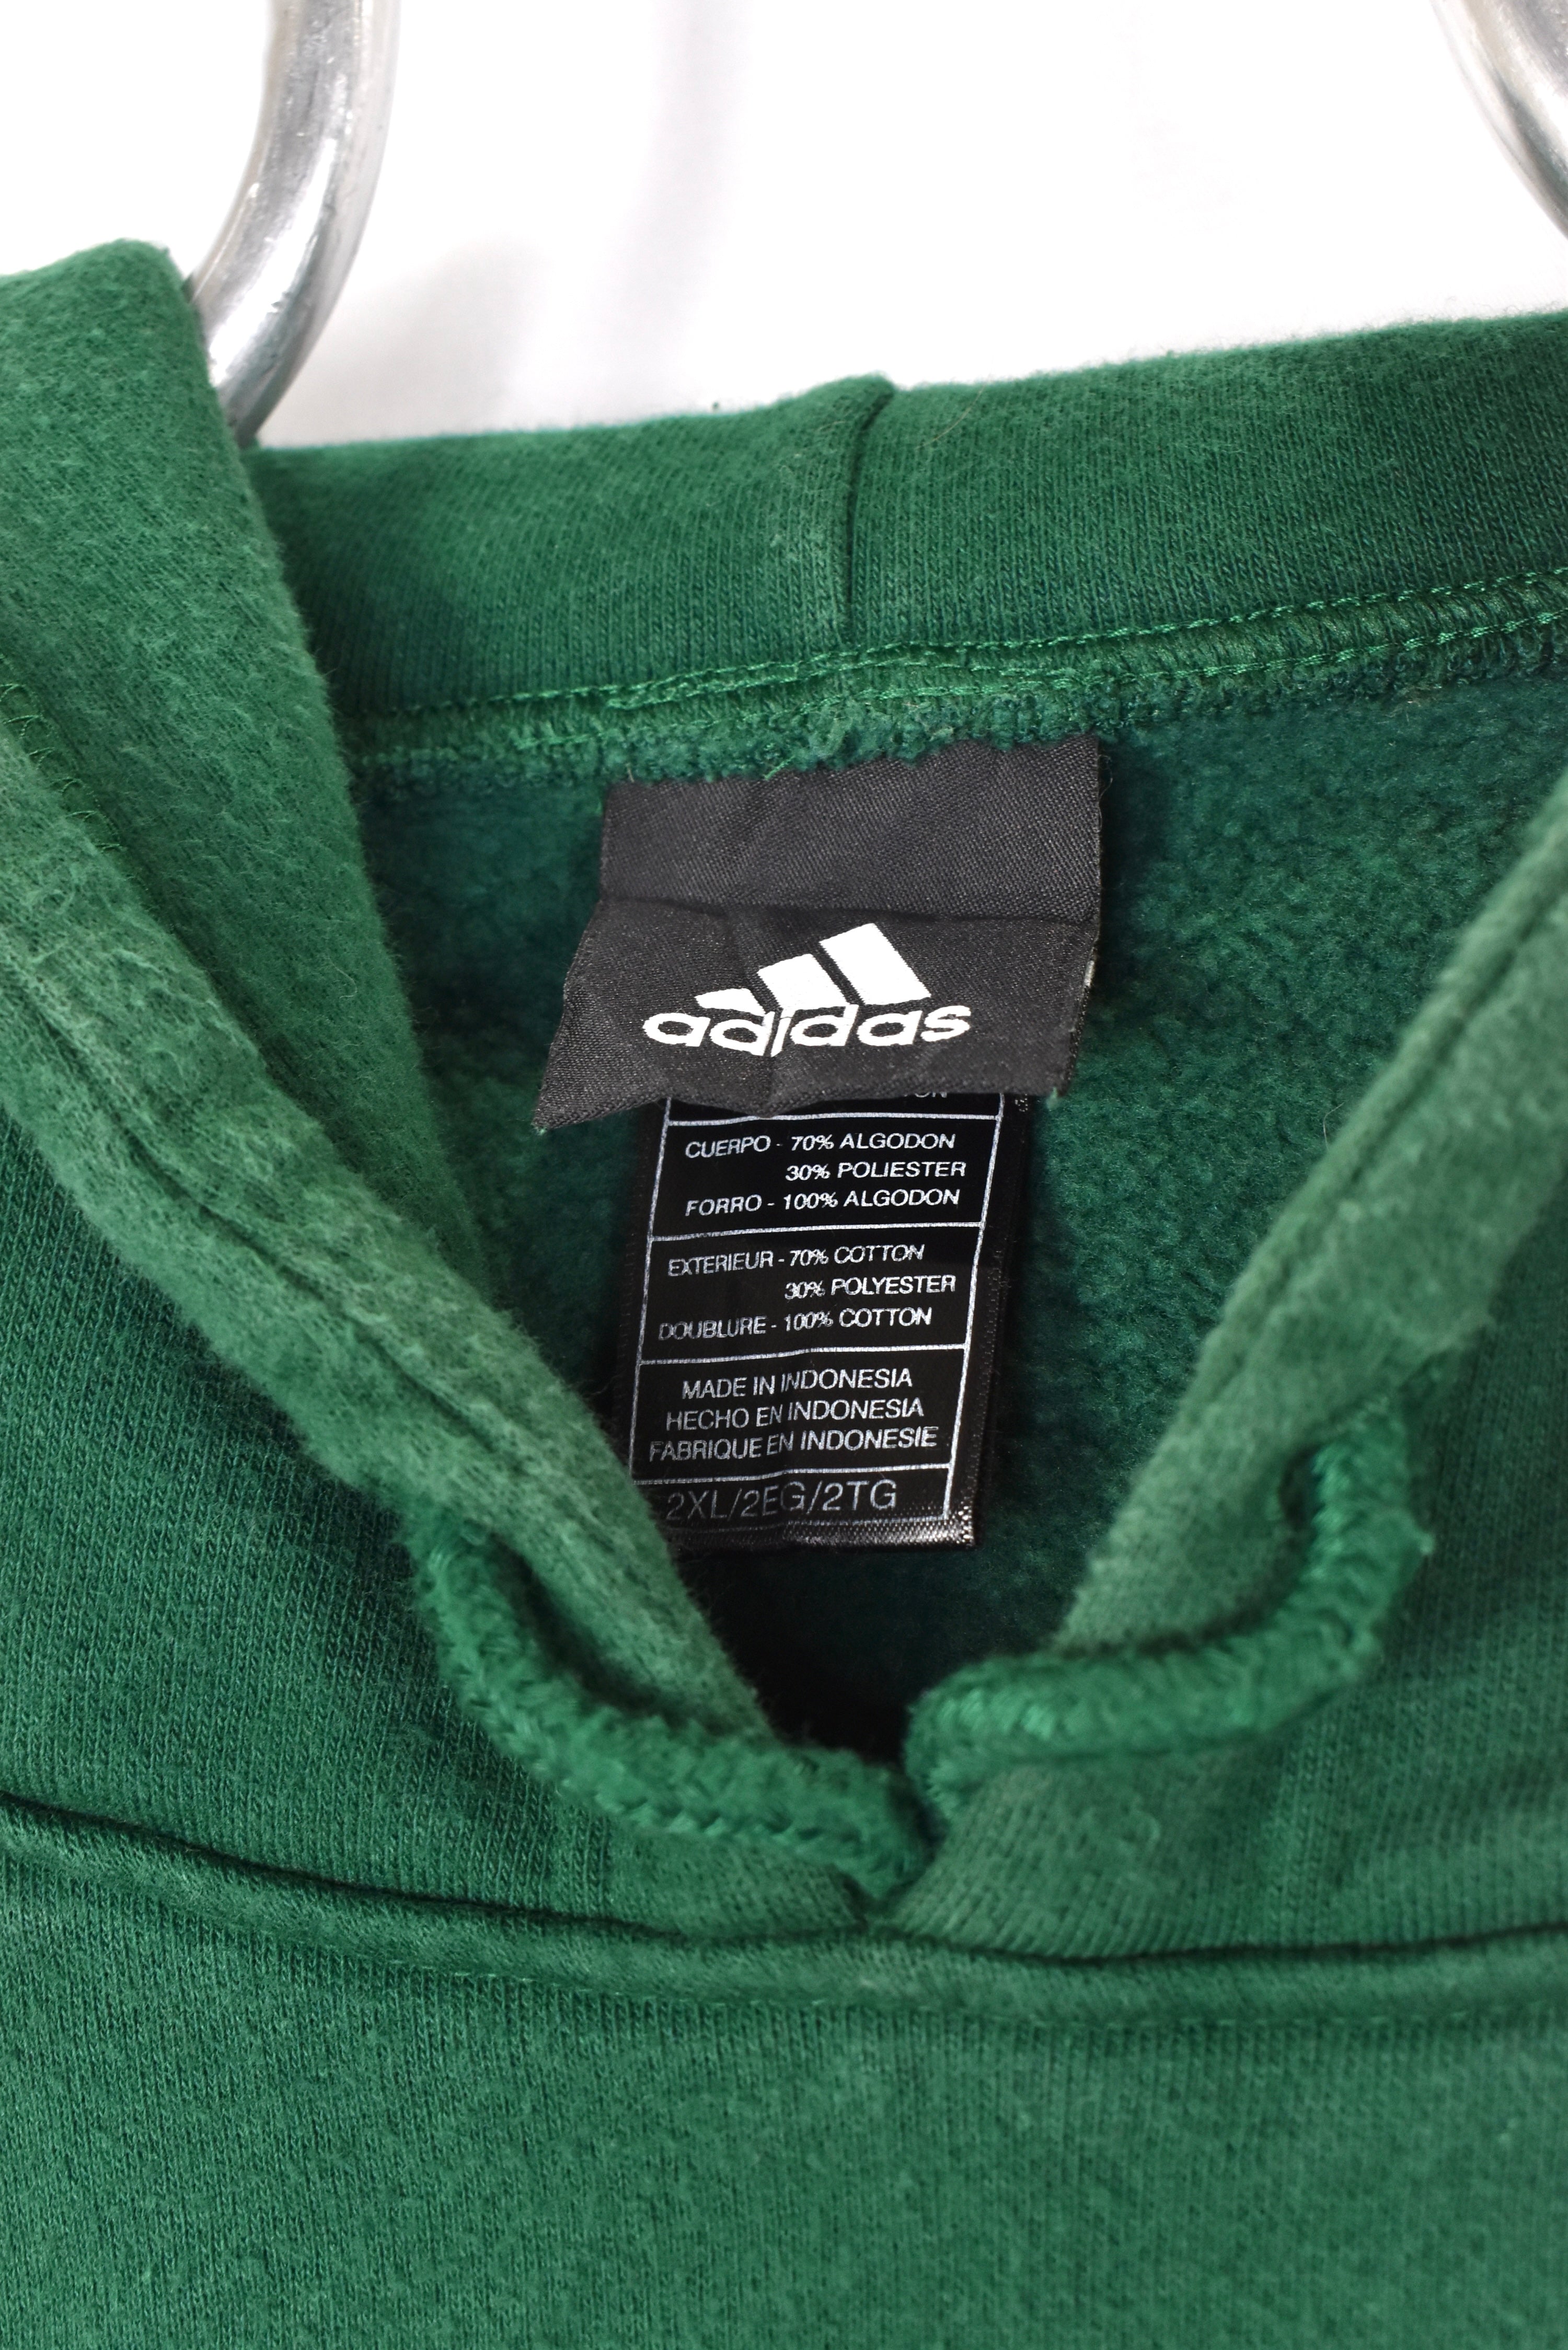 Vintage Adidas hoodie, green embroidered sweatshirt - AU XXL ADIDAS